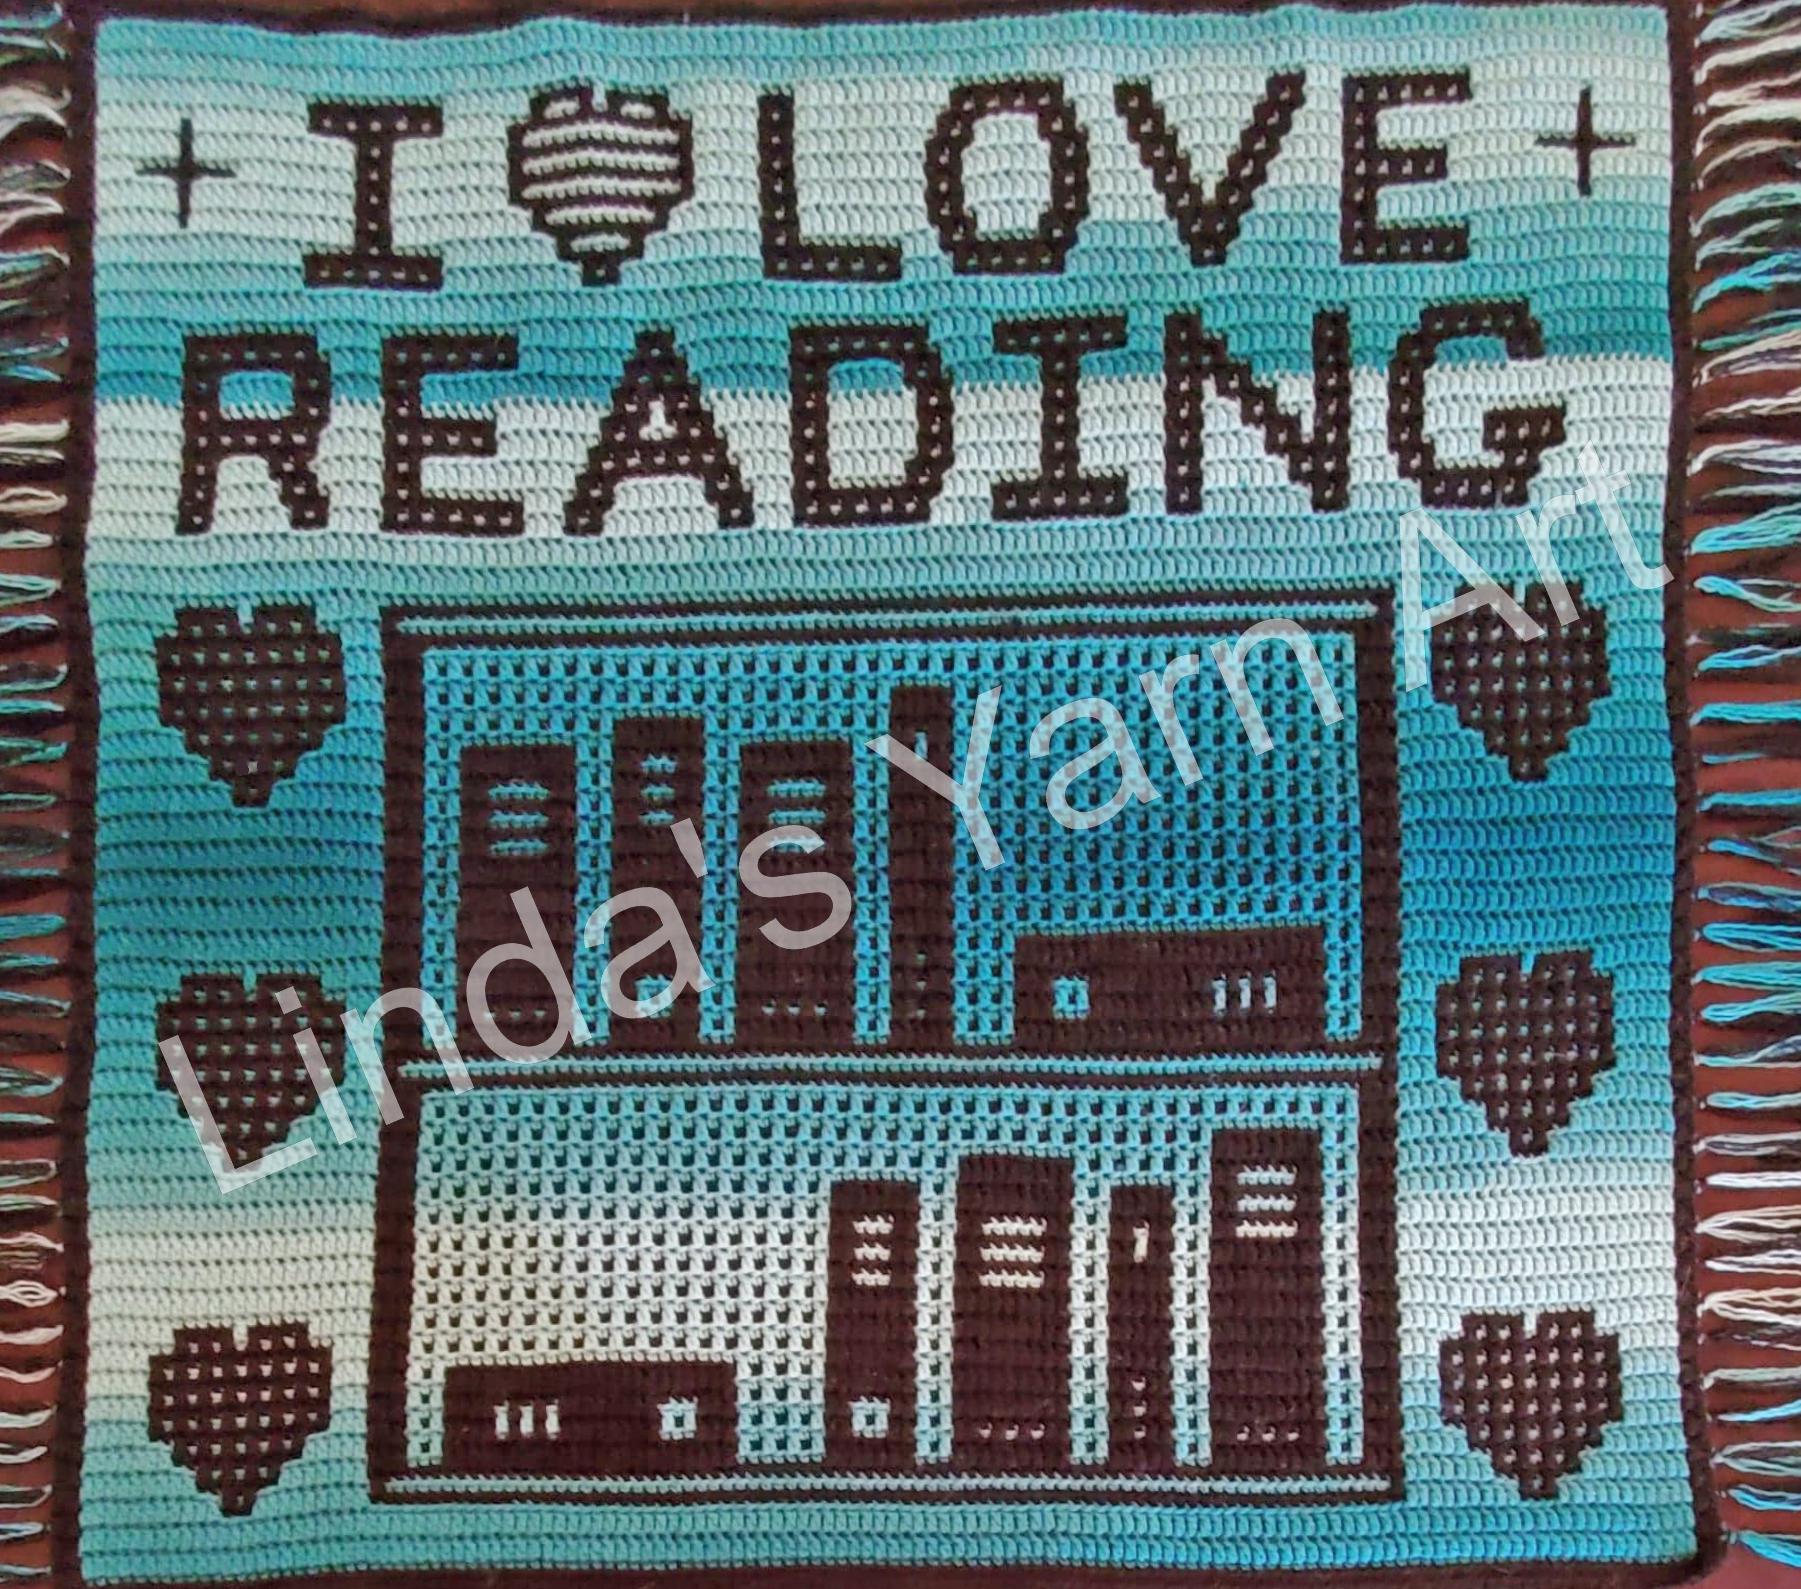 Mosaic Bookshelf, I Love Reading – Linda's Yarn Art